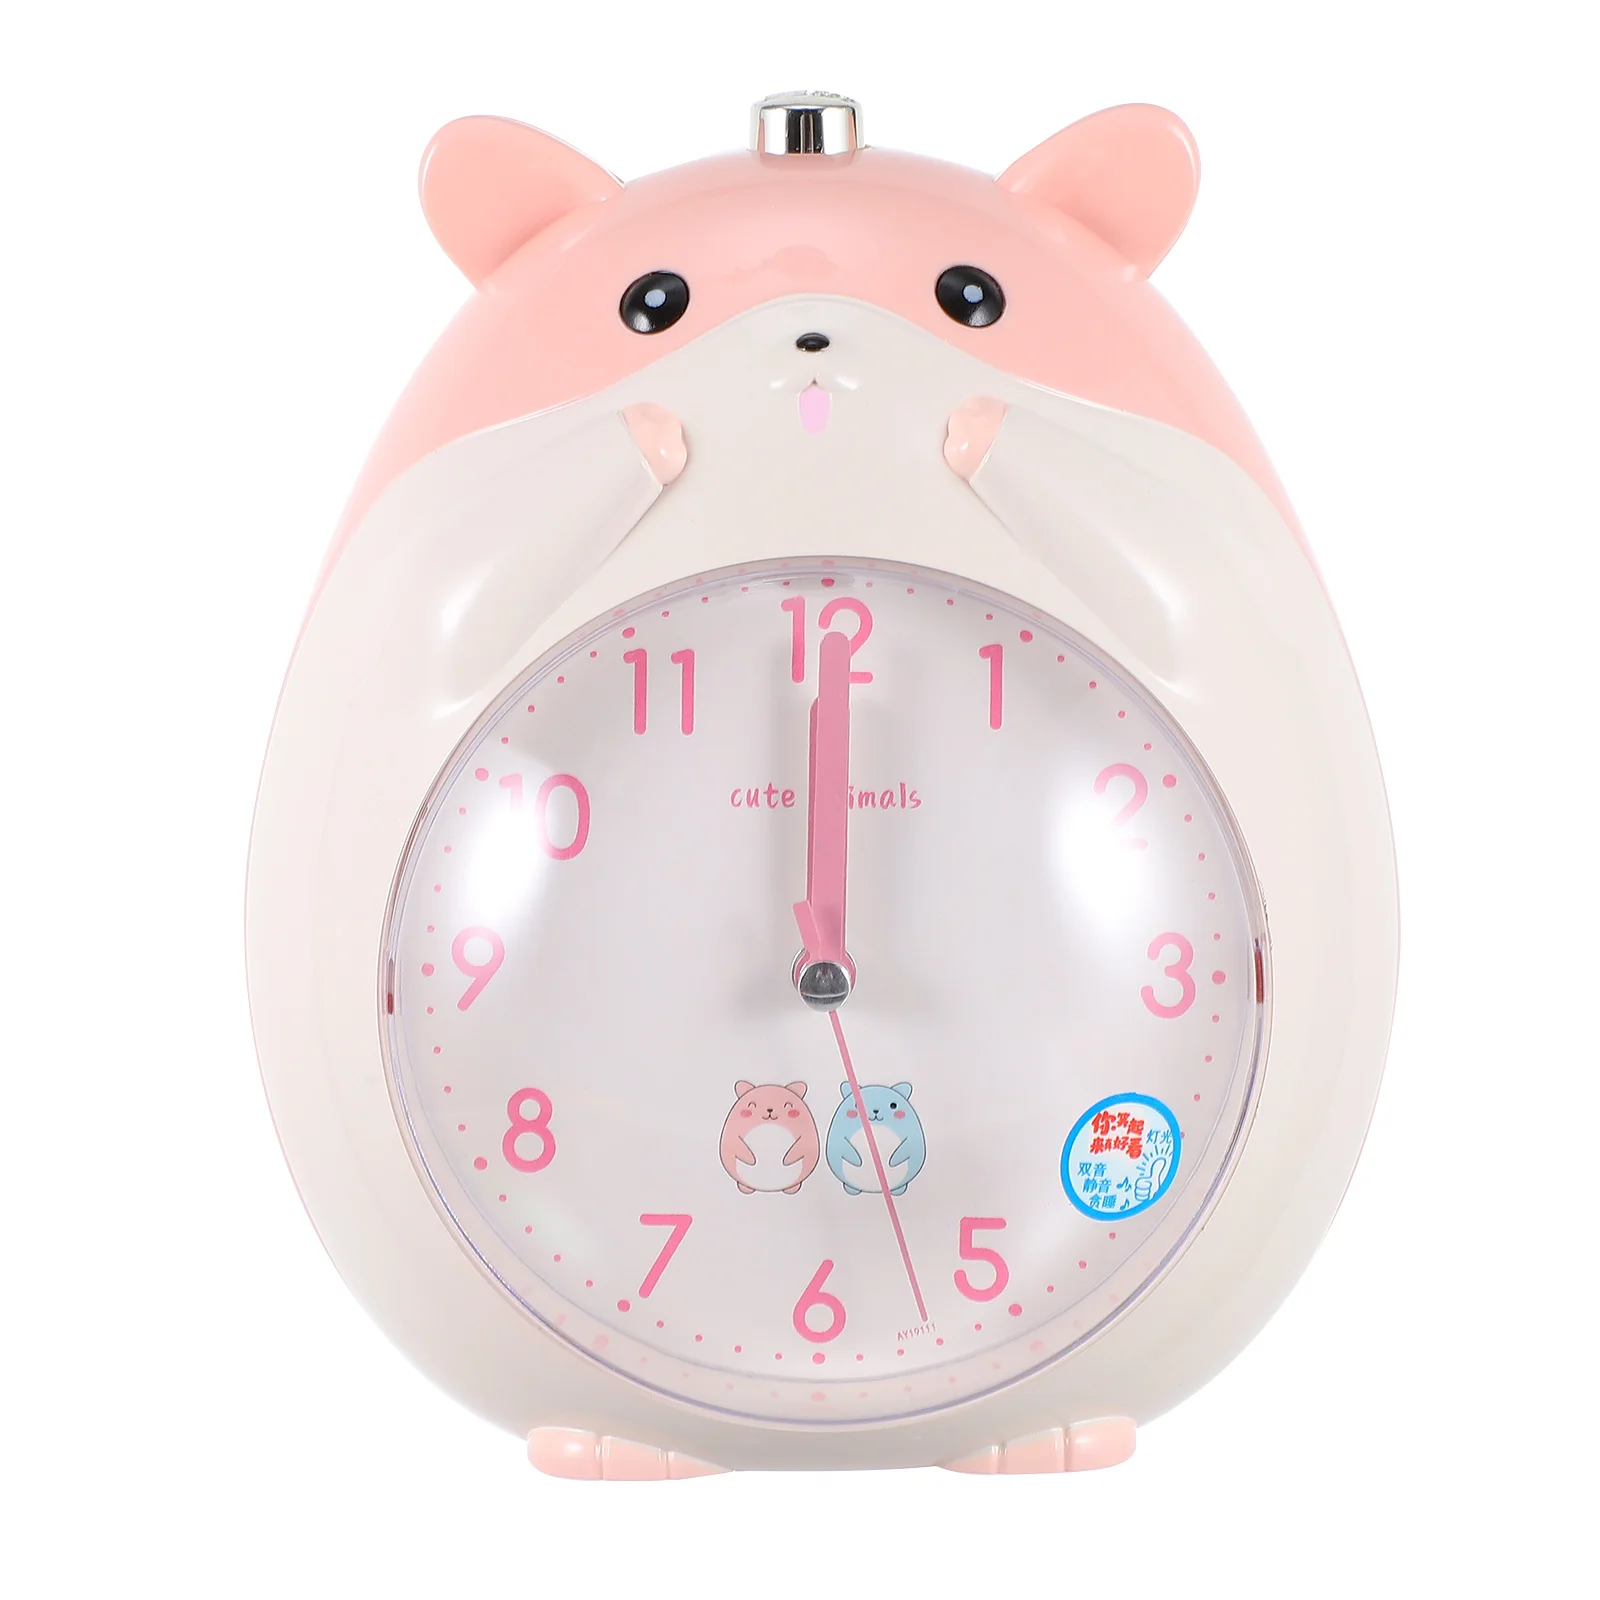 

Veemoon Bedroom Clock Kids Alarm Clock Night Light Snooze Function Cartoon Hamster Digital Alarm Clock